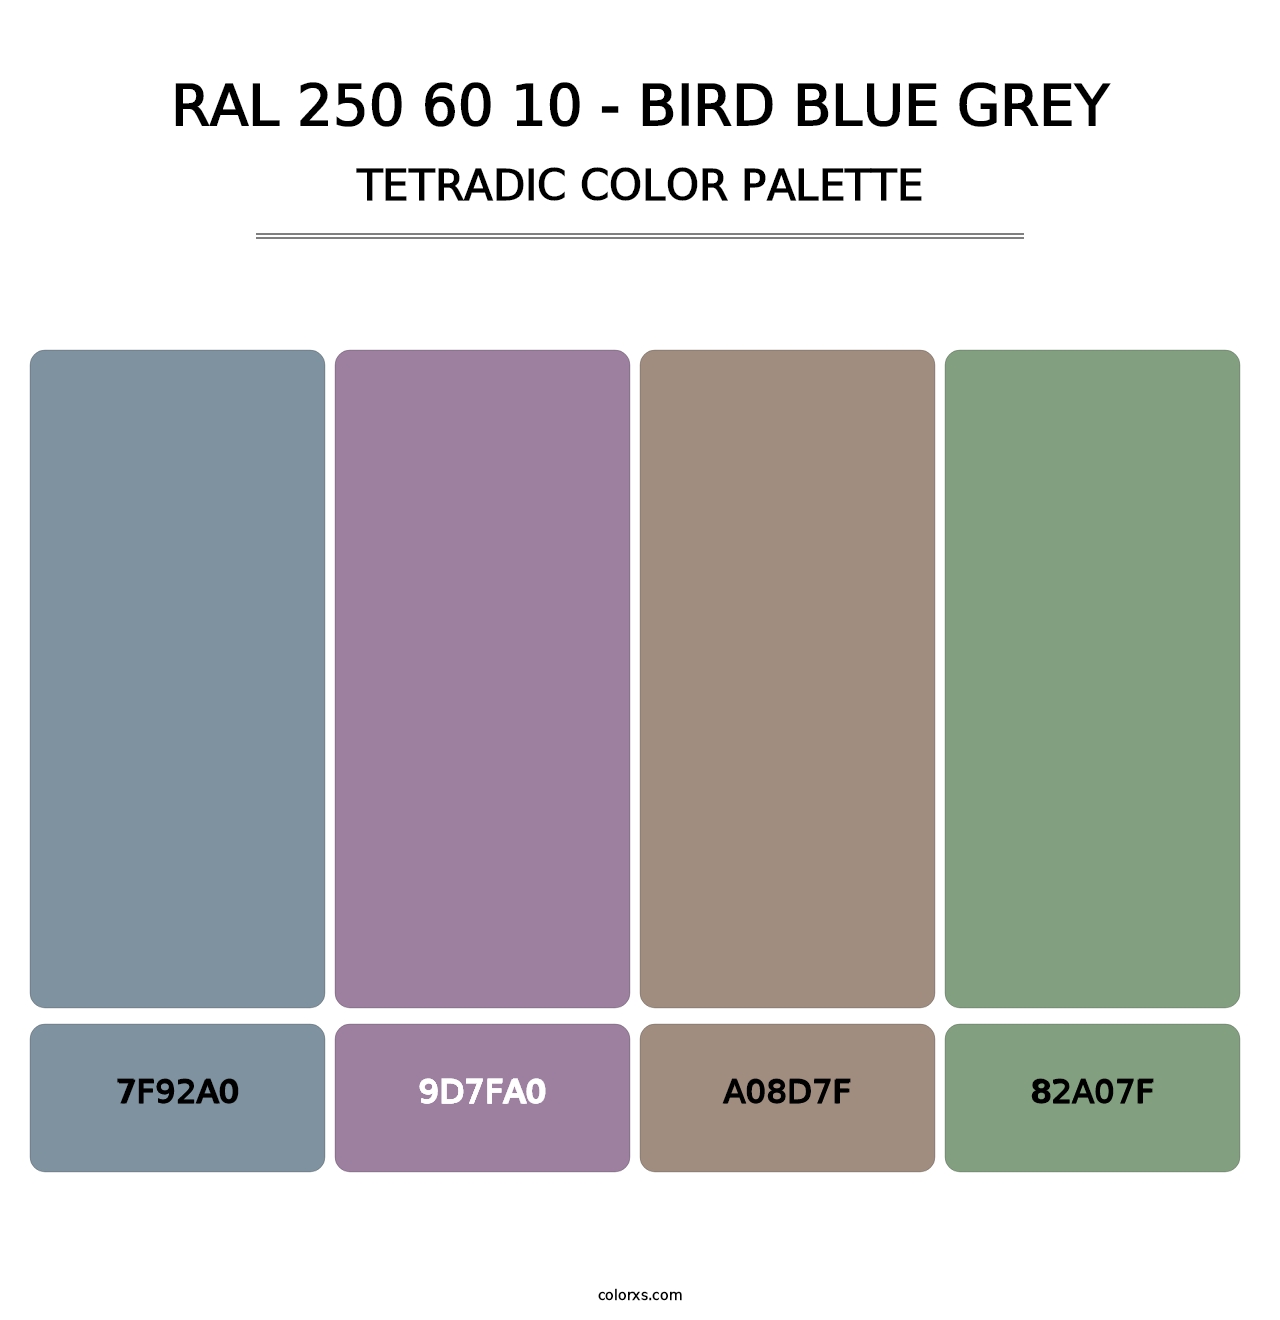 RAL 250 60 10 - Bird Blue Grey - Tetradic Color Palette